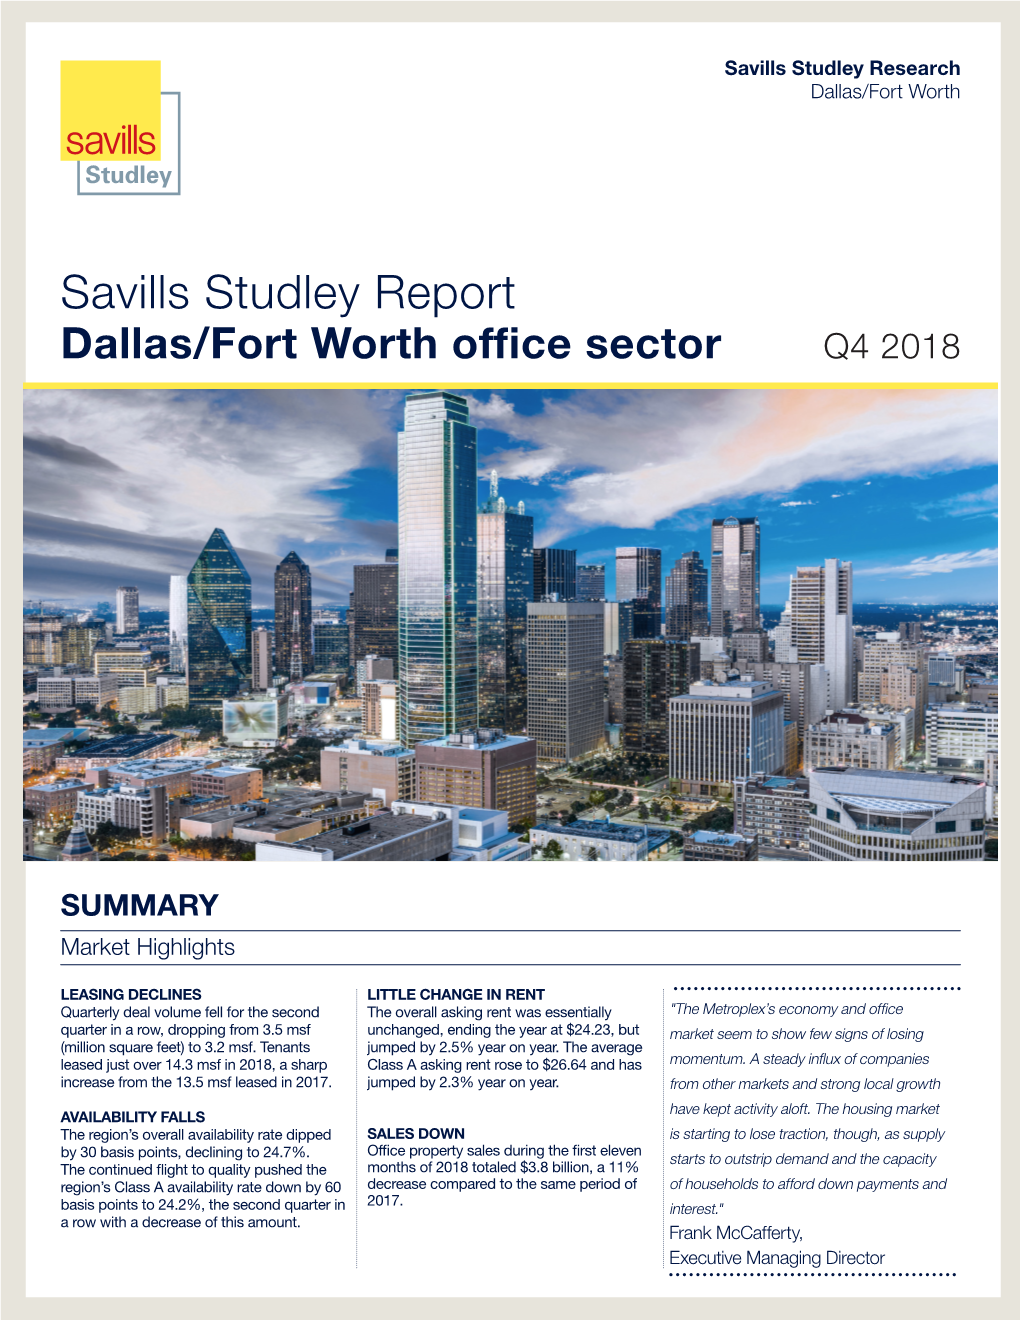 Savills Studley Report Dallas/Fort Worth Office Sector Q4 2018